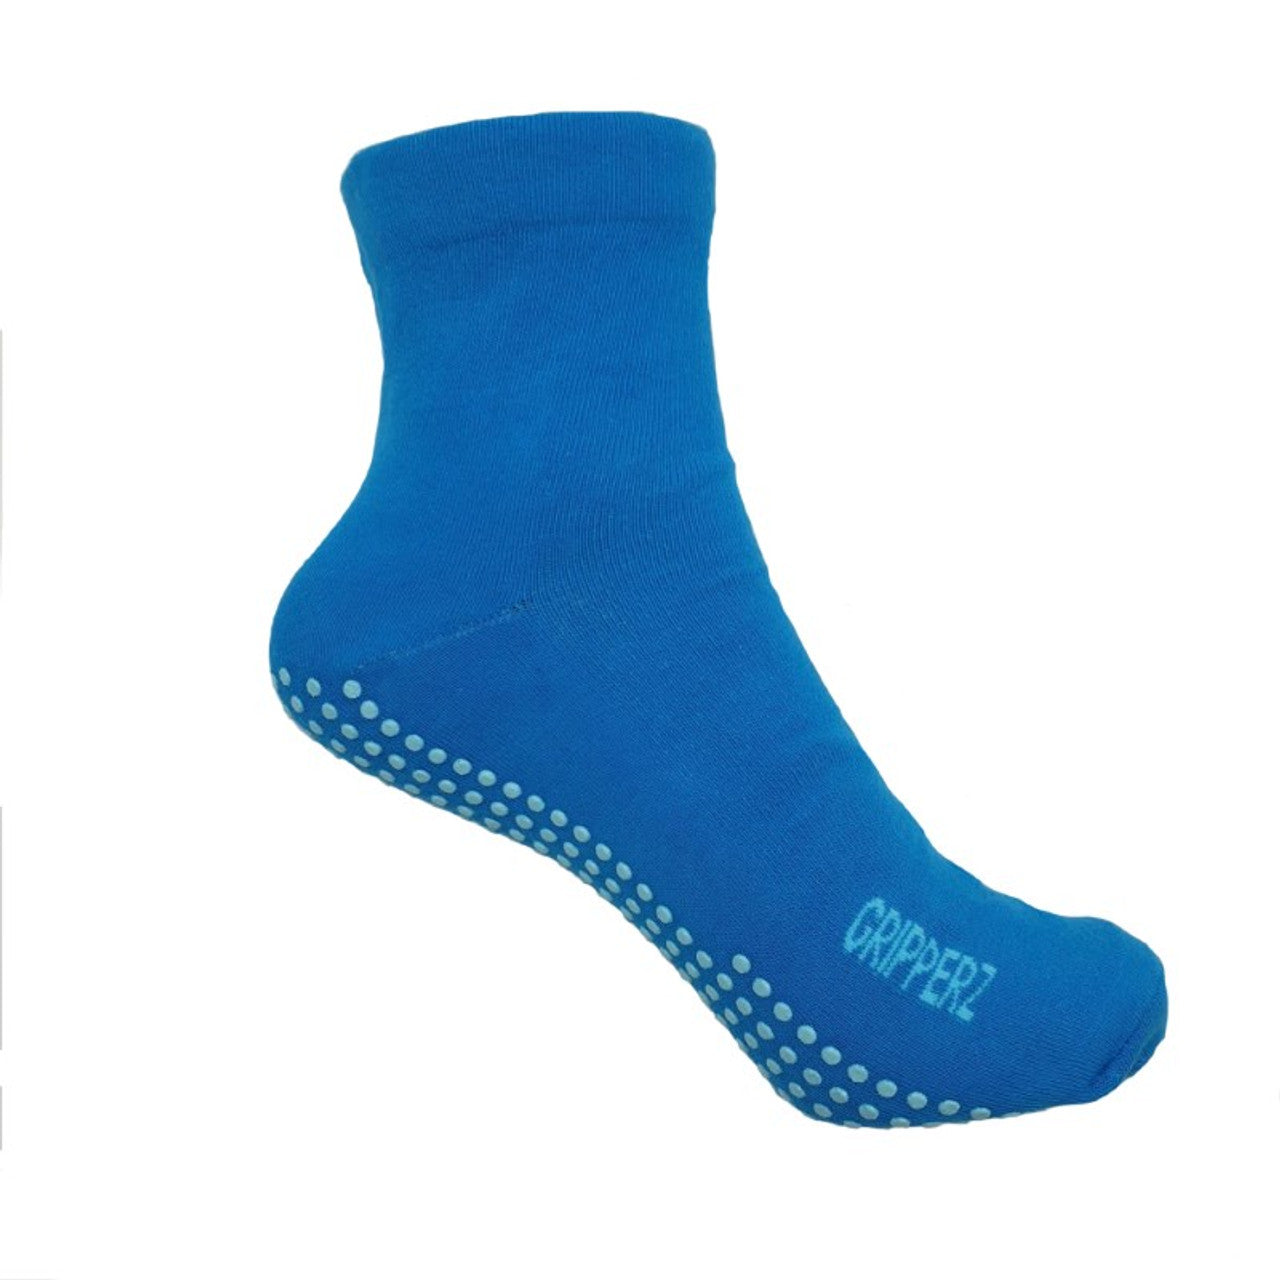 Gripperz Maxi Hospital Socks // Non Slip // Diabetic Safe